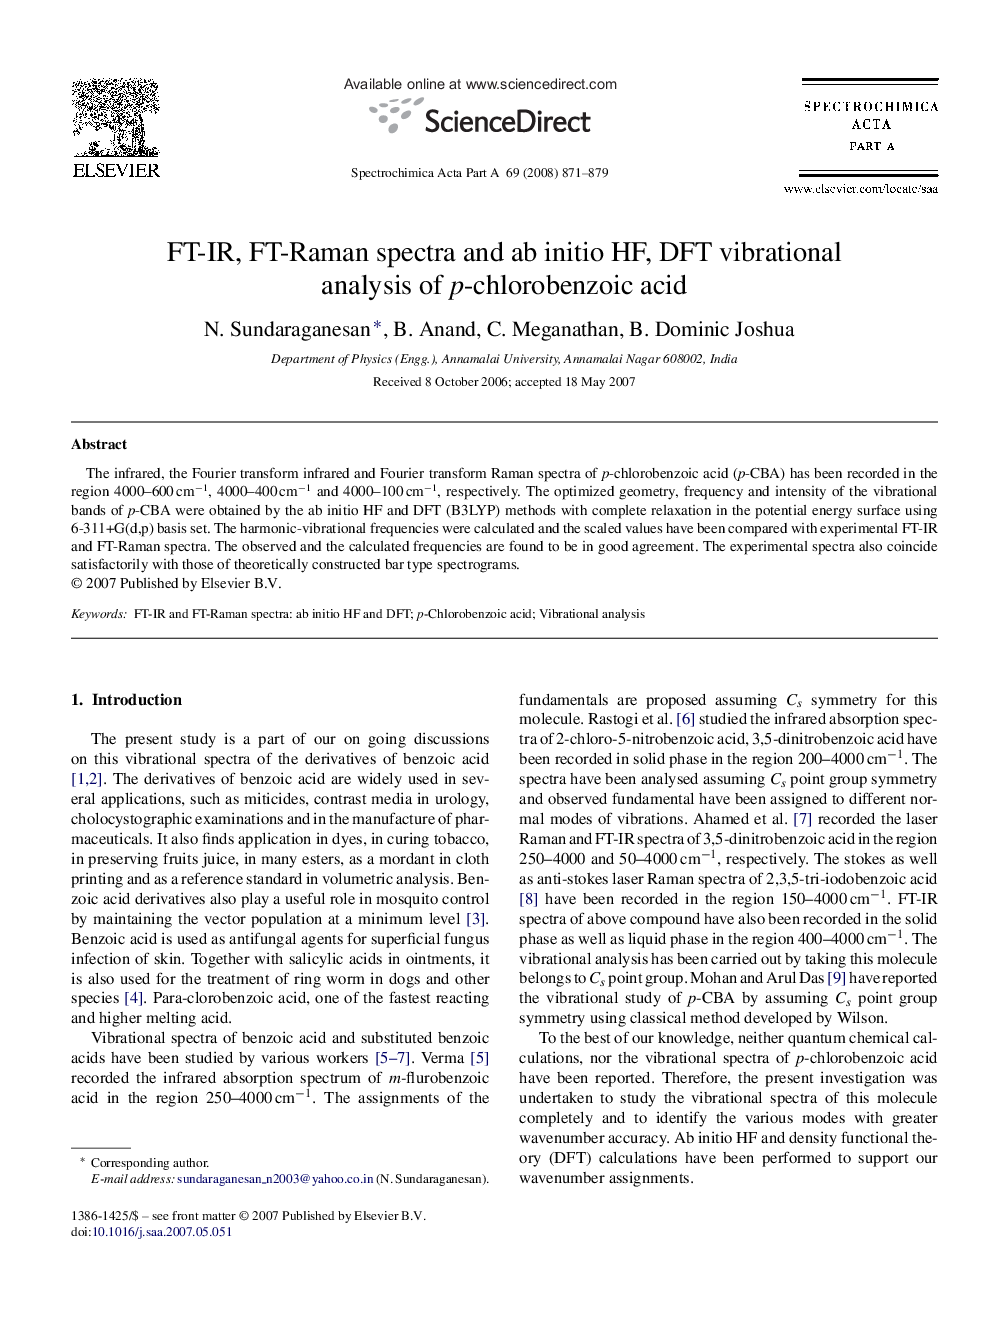 FT-IR, FT-Raman spectra and ab initio HF, DFT vibrational analysis of p-chlorobenzoic acid